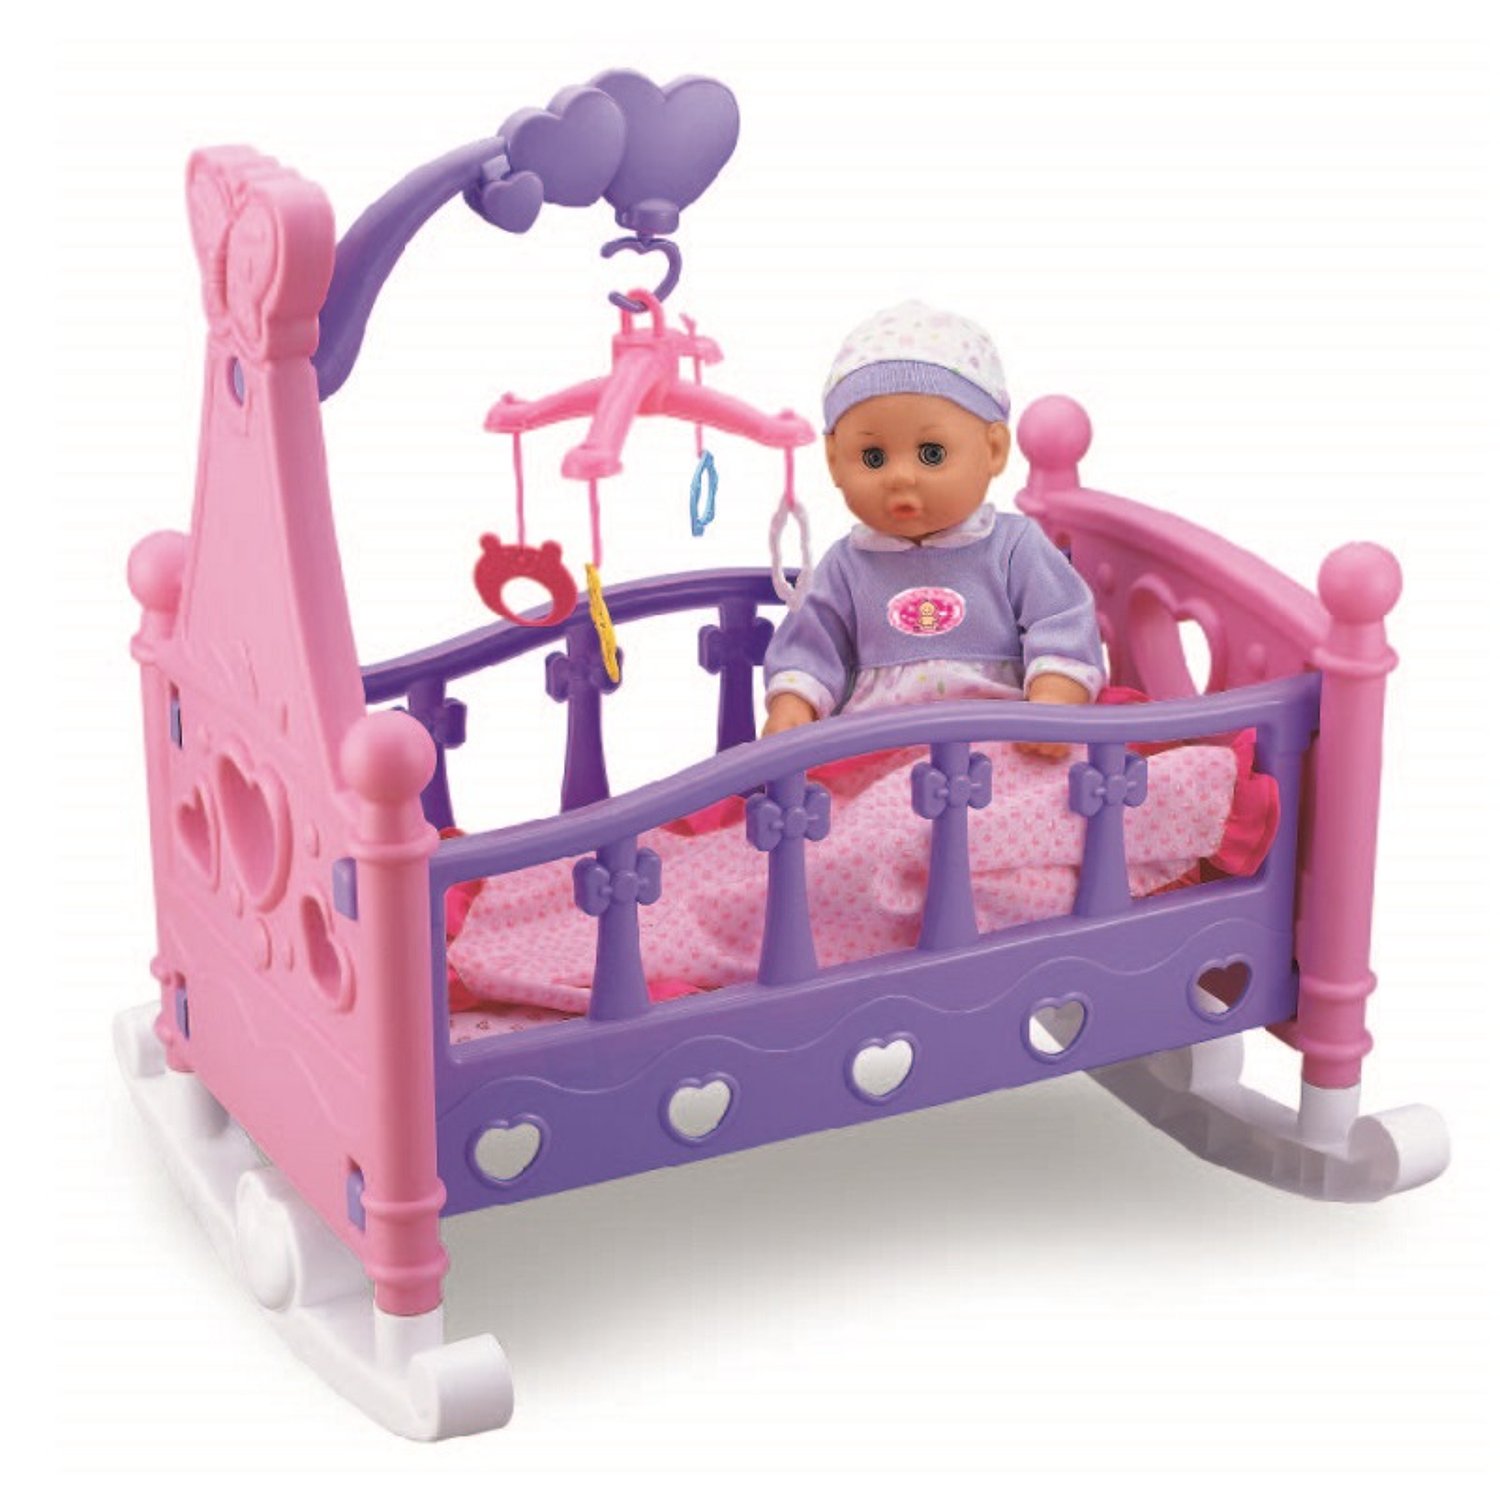 Baby Cradle Demi Baby кроватка для кукол